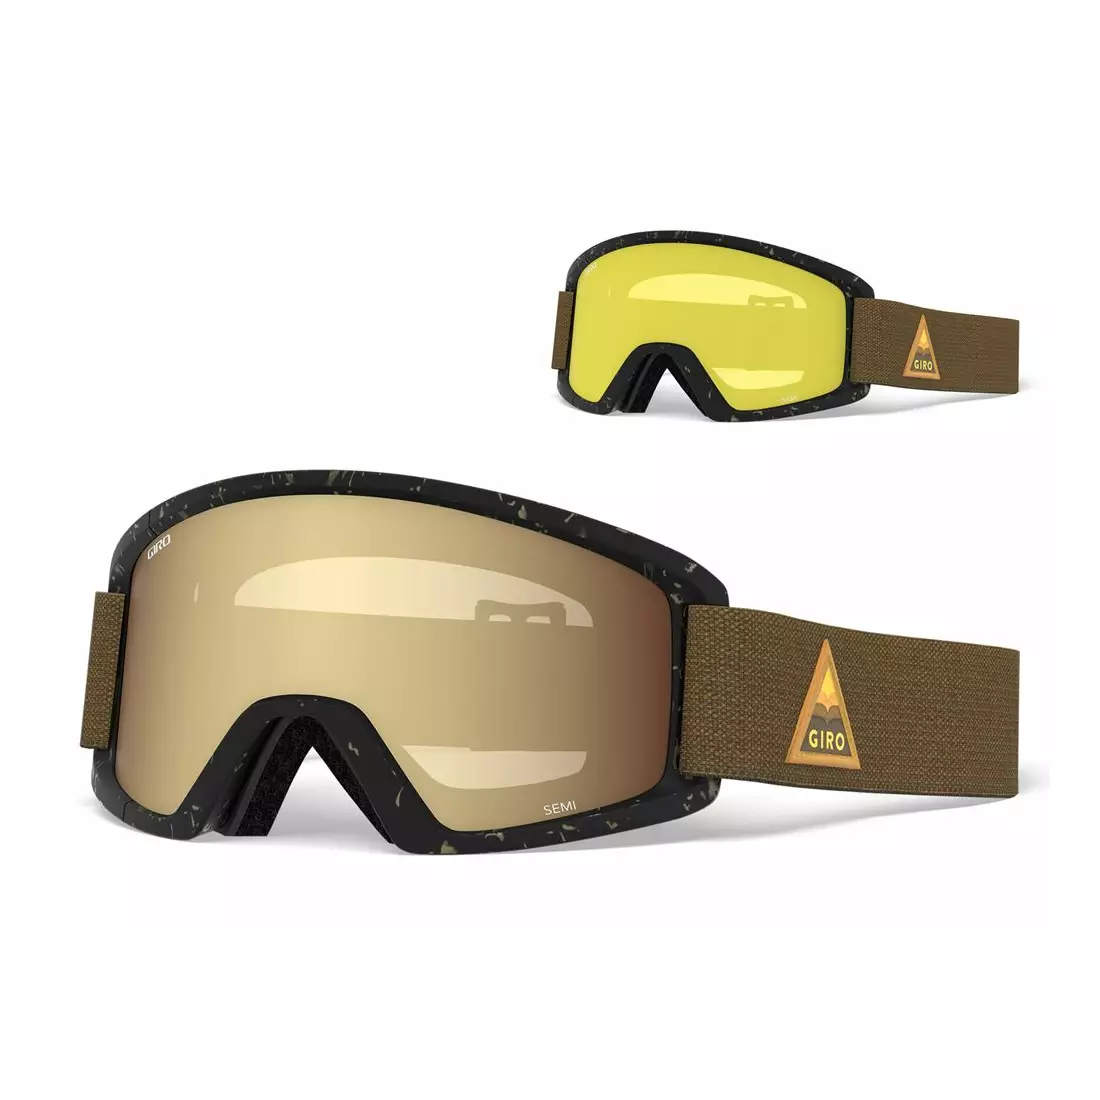  Ski/snowboard winter goggles GIRO SEMI RUSTI RUST ARROW MTN GR-7105391